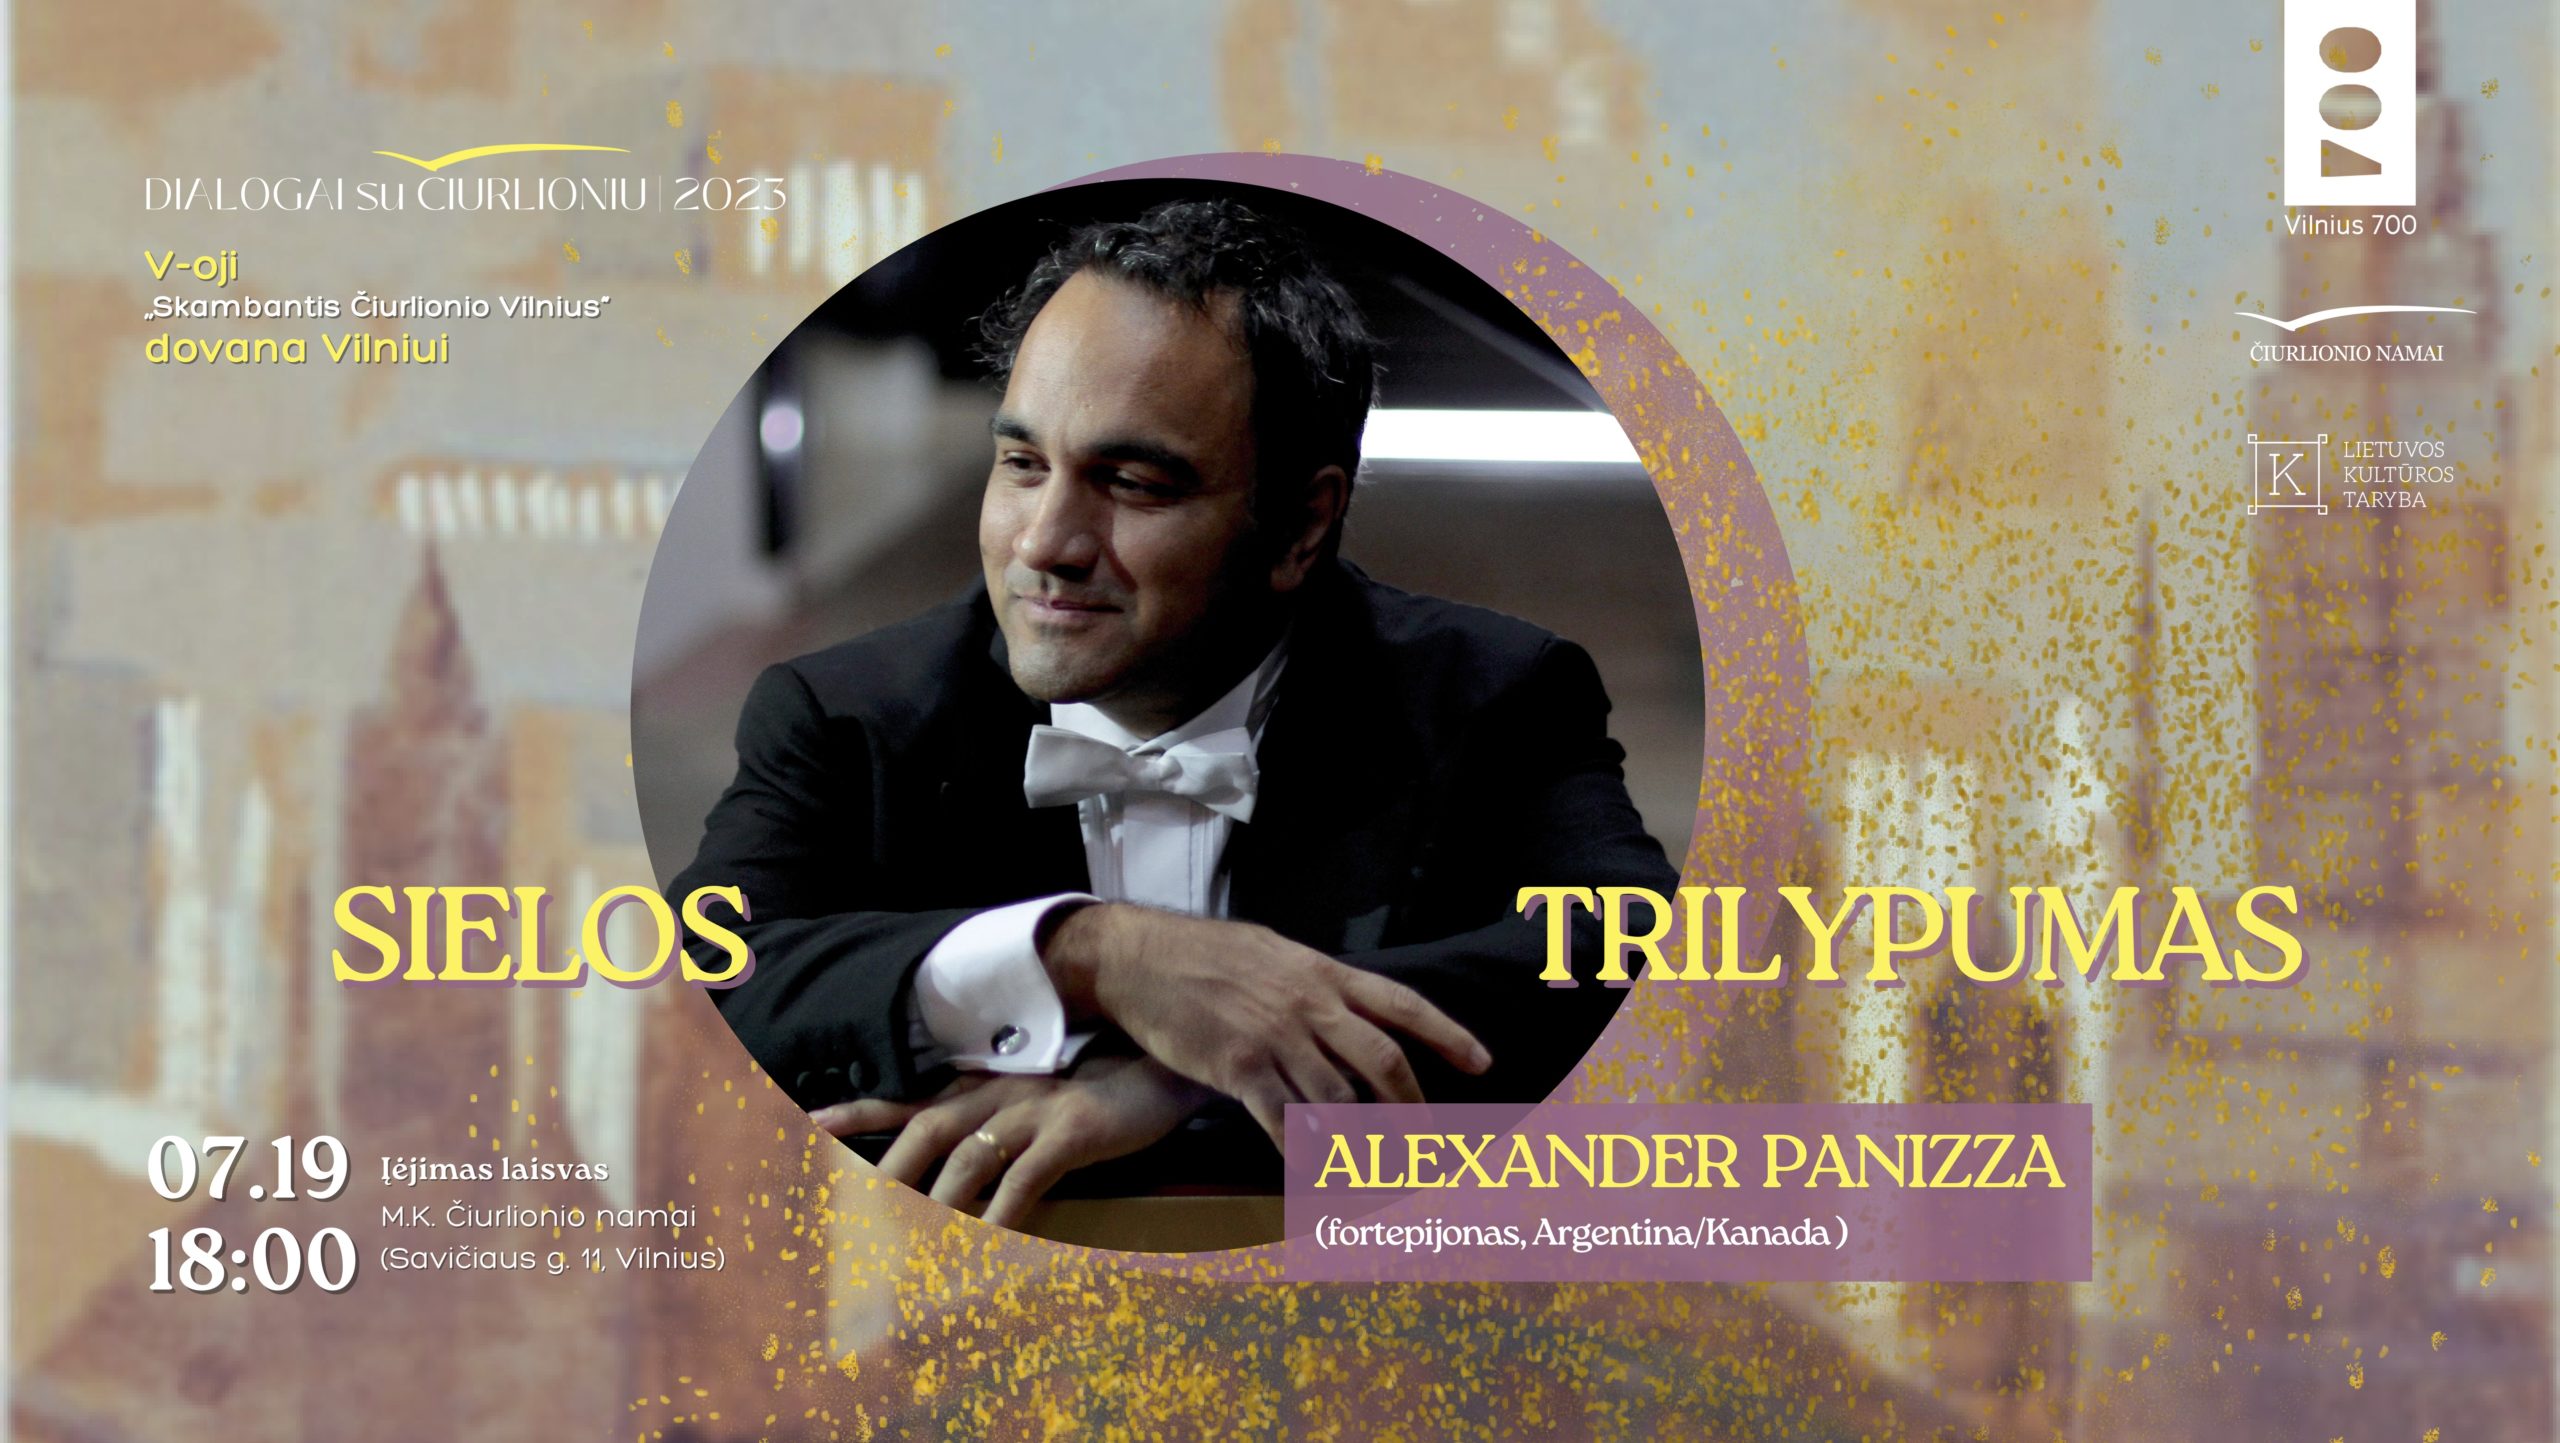 „Sielos trilypumas“: Alexander Panizza (fortepijonas, Argentina / Kanada)